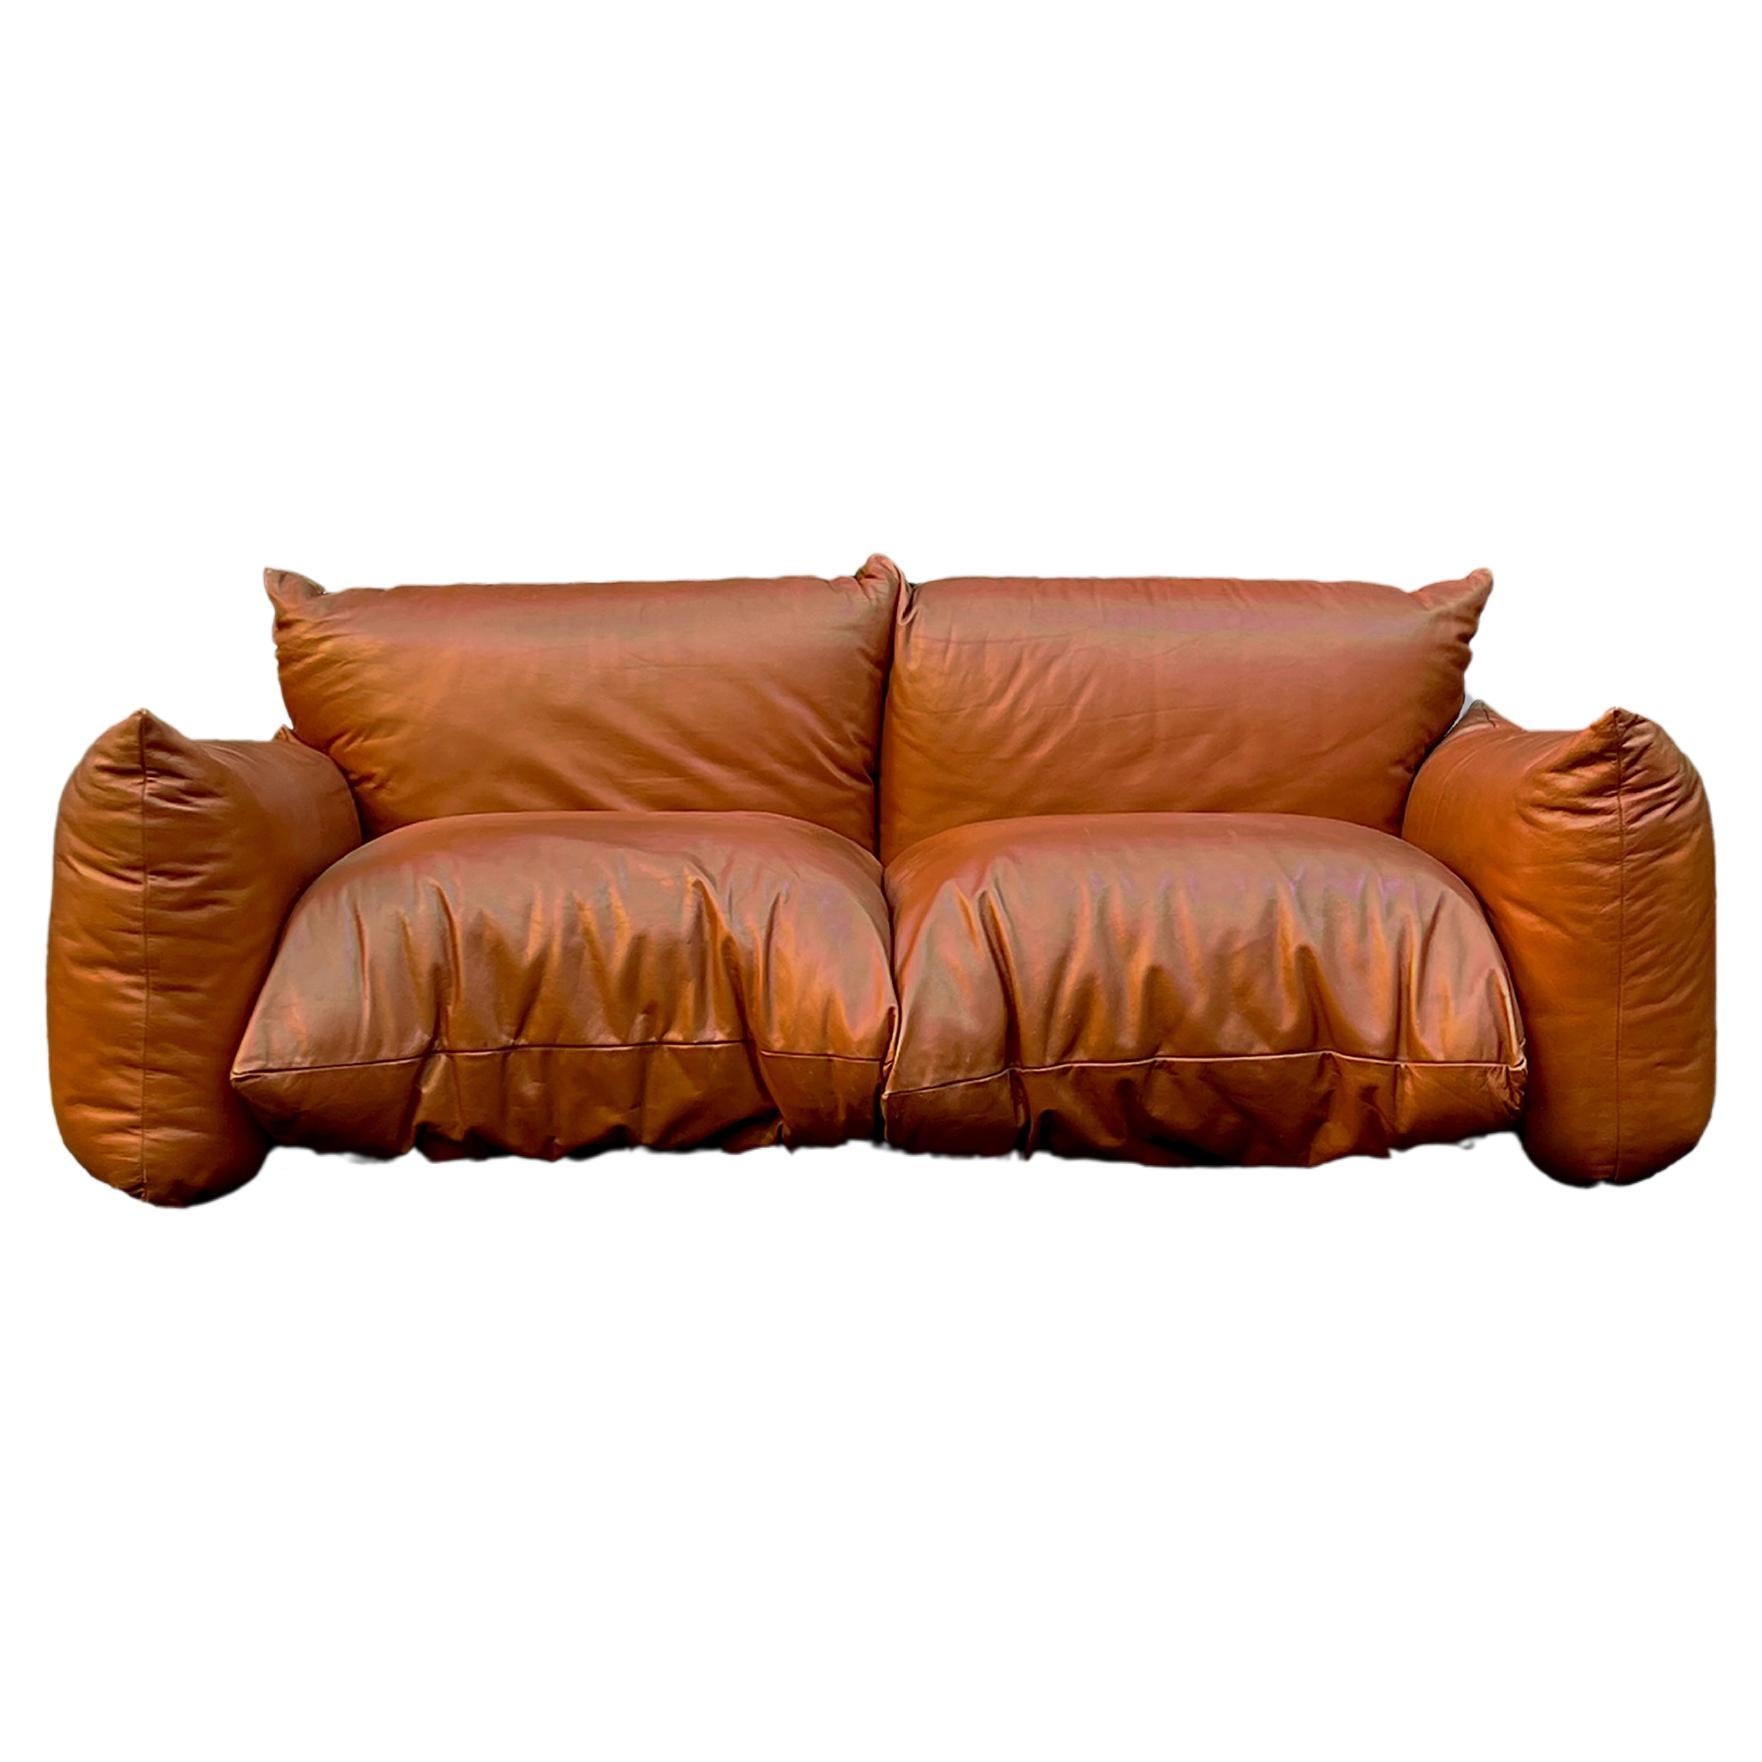 “Marenco” cognac leather sofa designed by Mario Marenco for Arflex, Italy 1970s